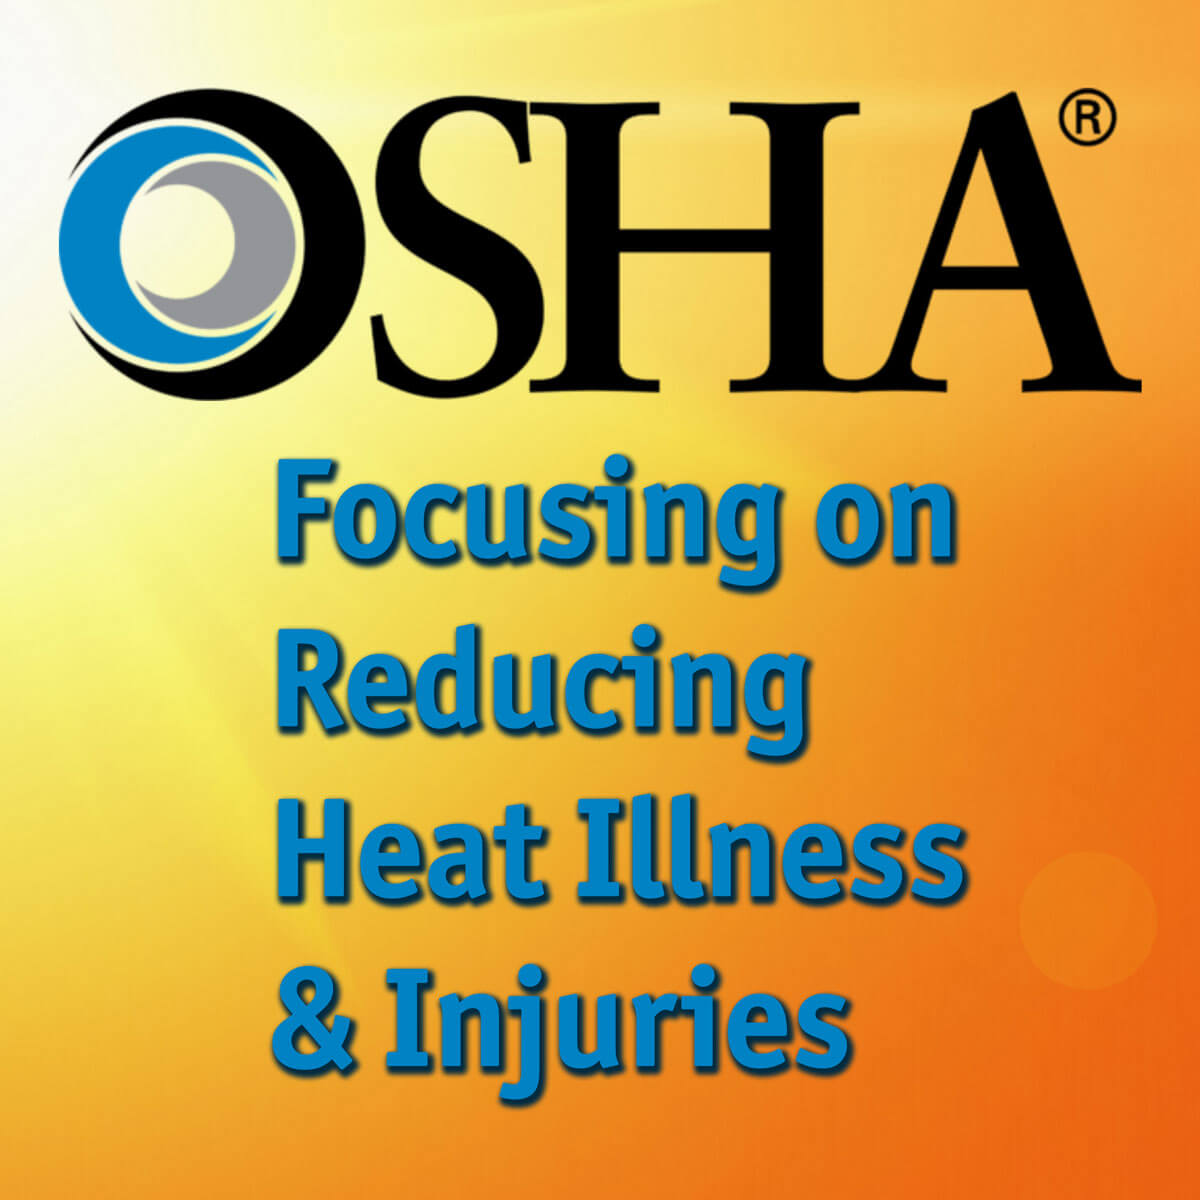 OSHA launches National Emphasis Program on Heat DQE